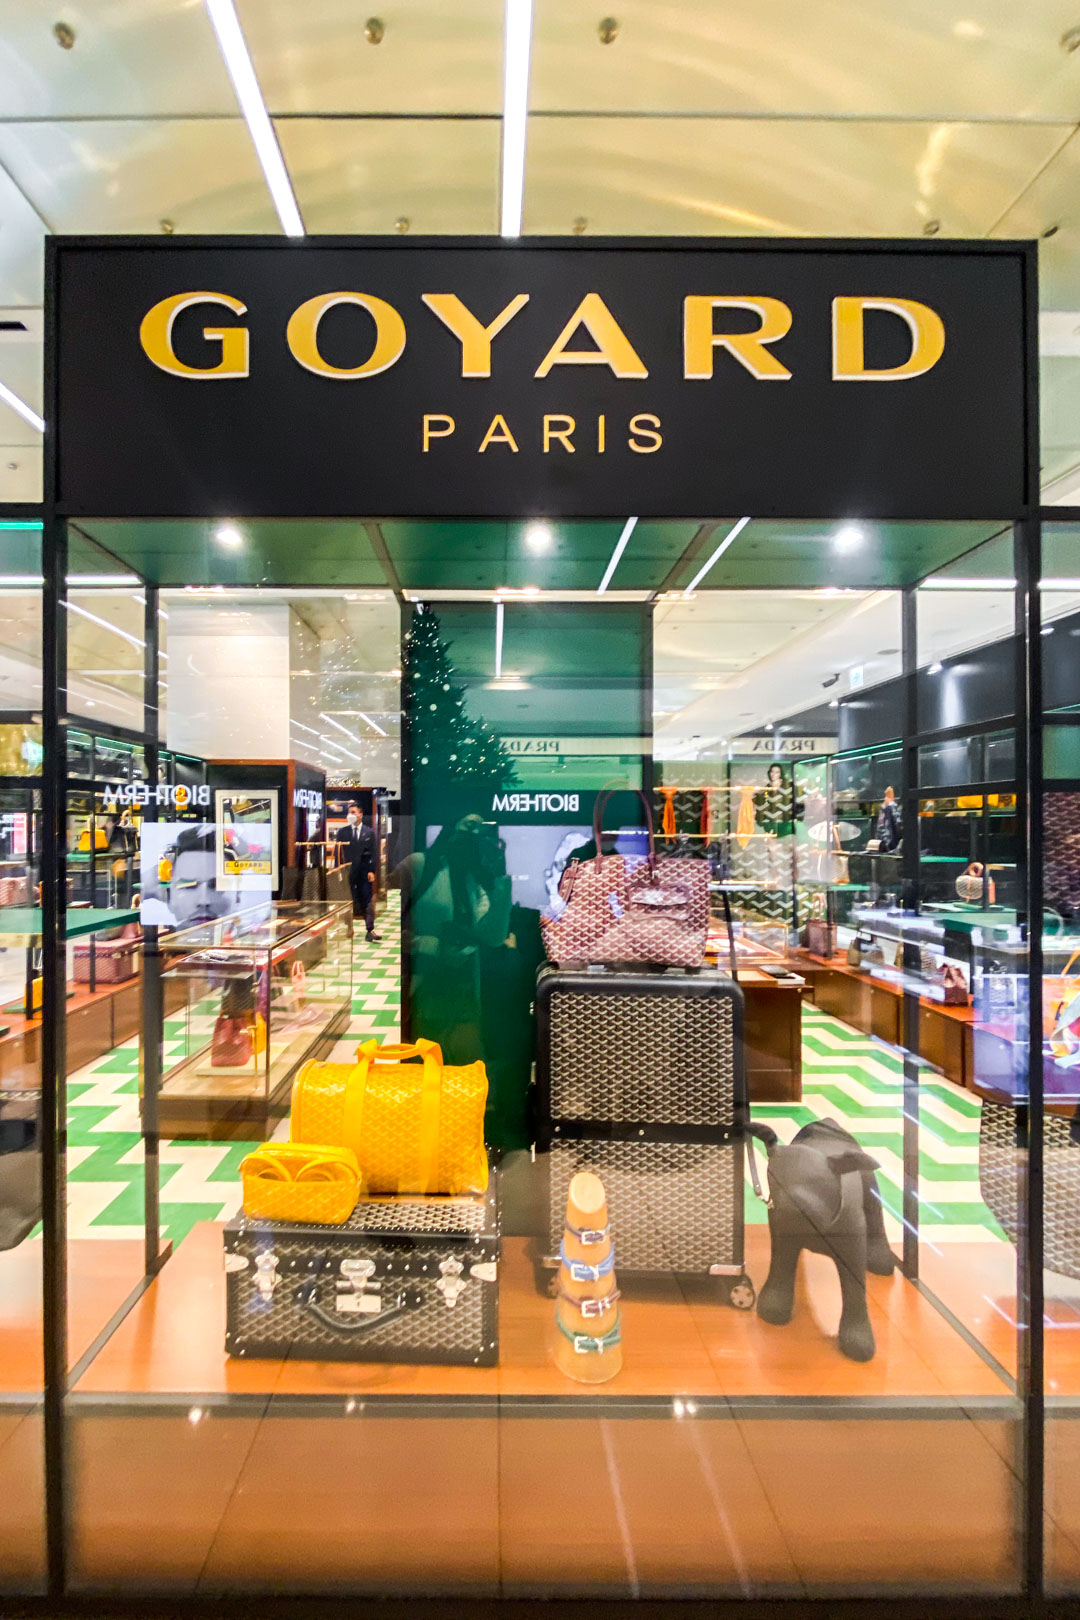 2021 Goyard Price List (USA vs. Paris) - The Luxury Lowdown